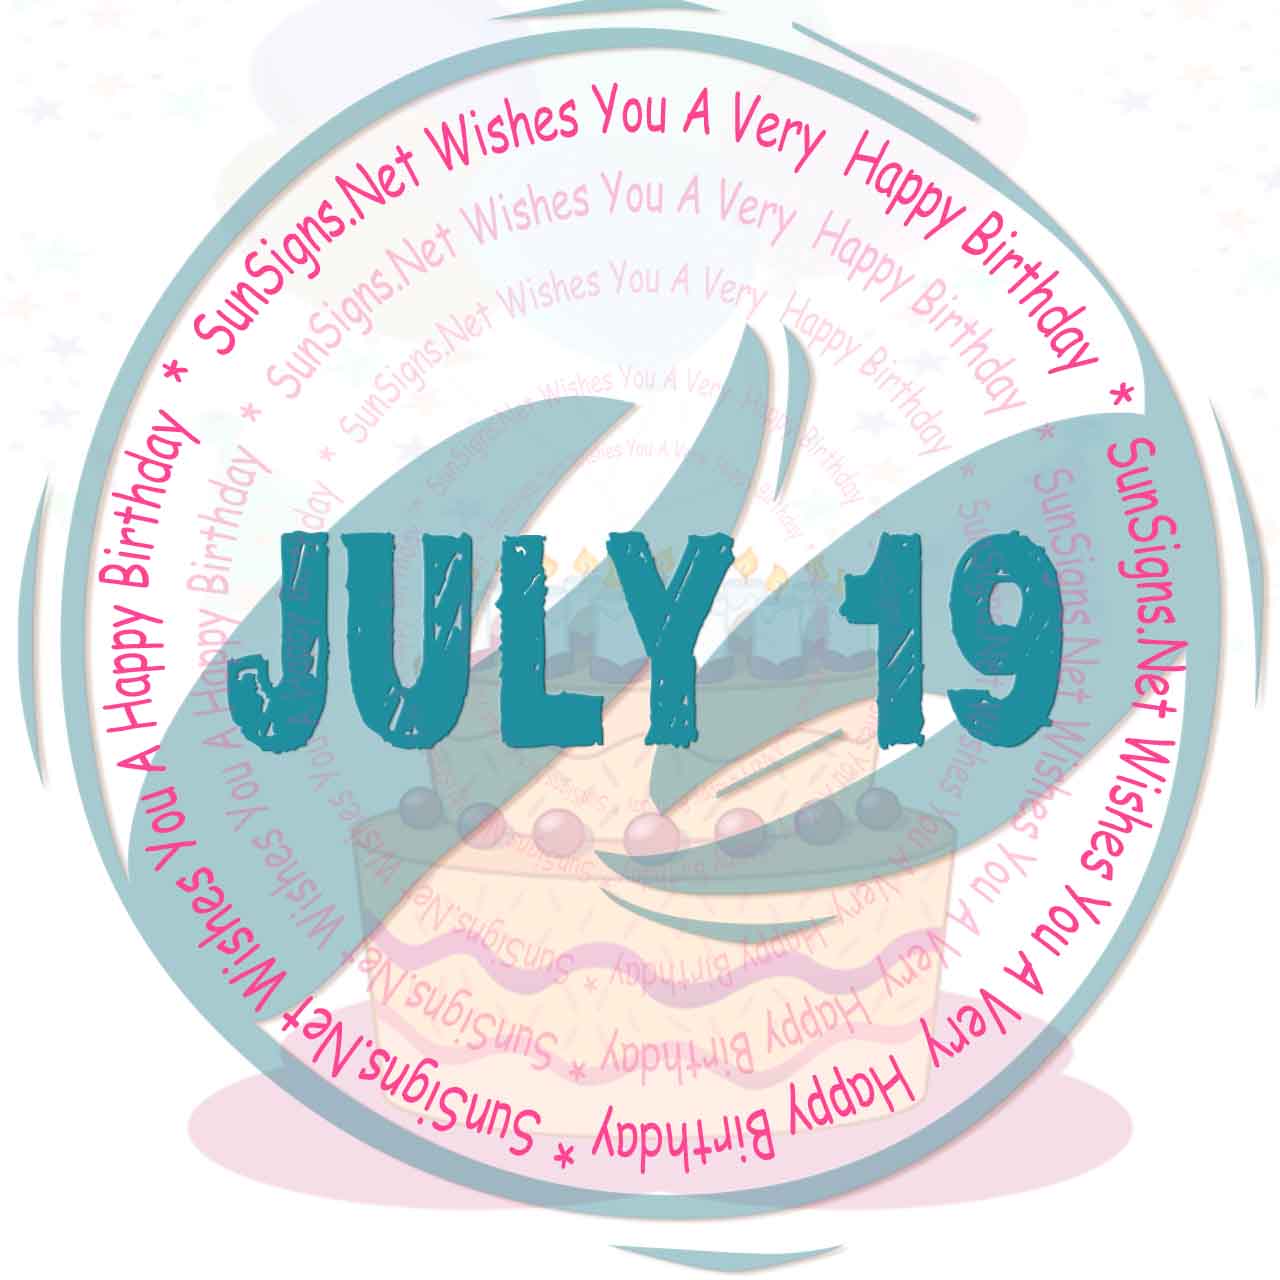 July 19 Zodiac is Cancer, Birthdays and Horoscope Zodiac Signs 101